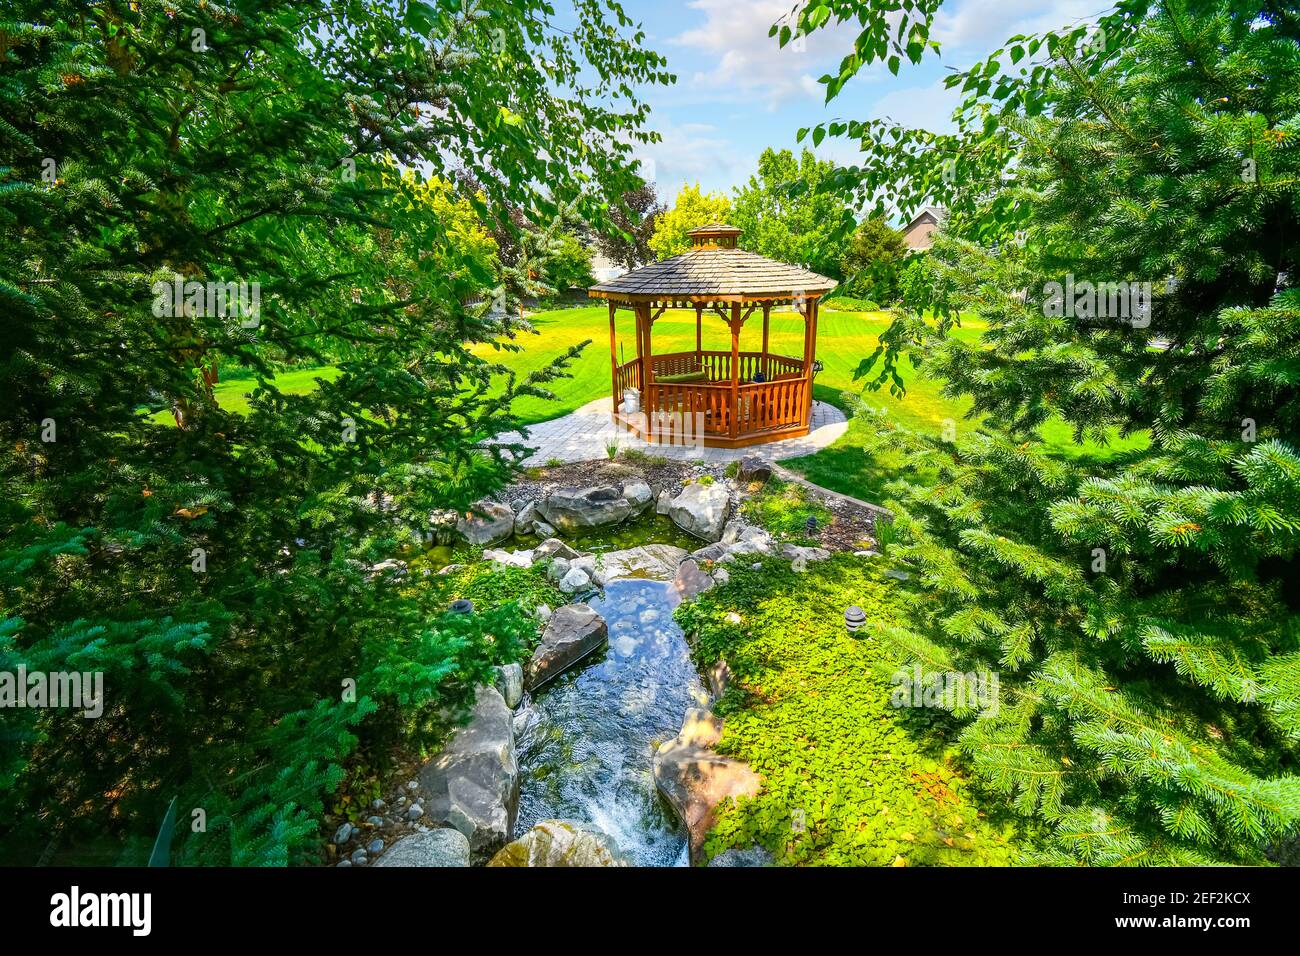 A small stream flows towards a wooden gazebo in a landscaped garden. Stock Photo